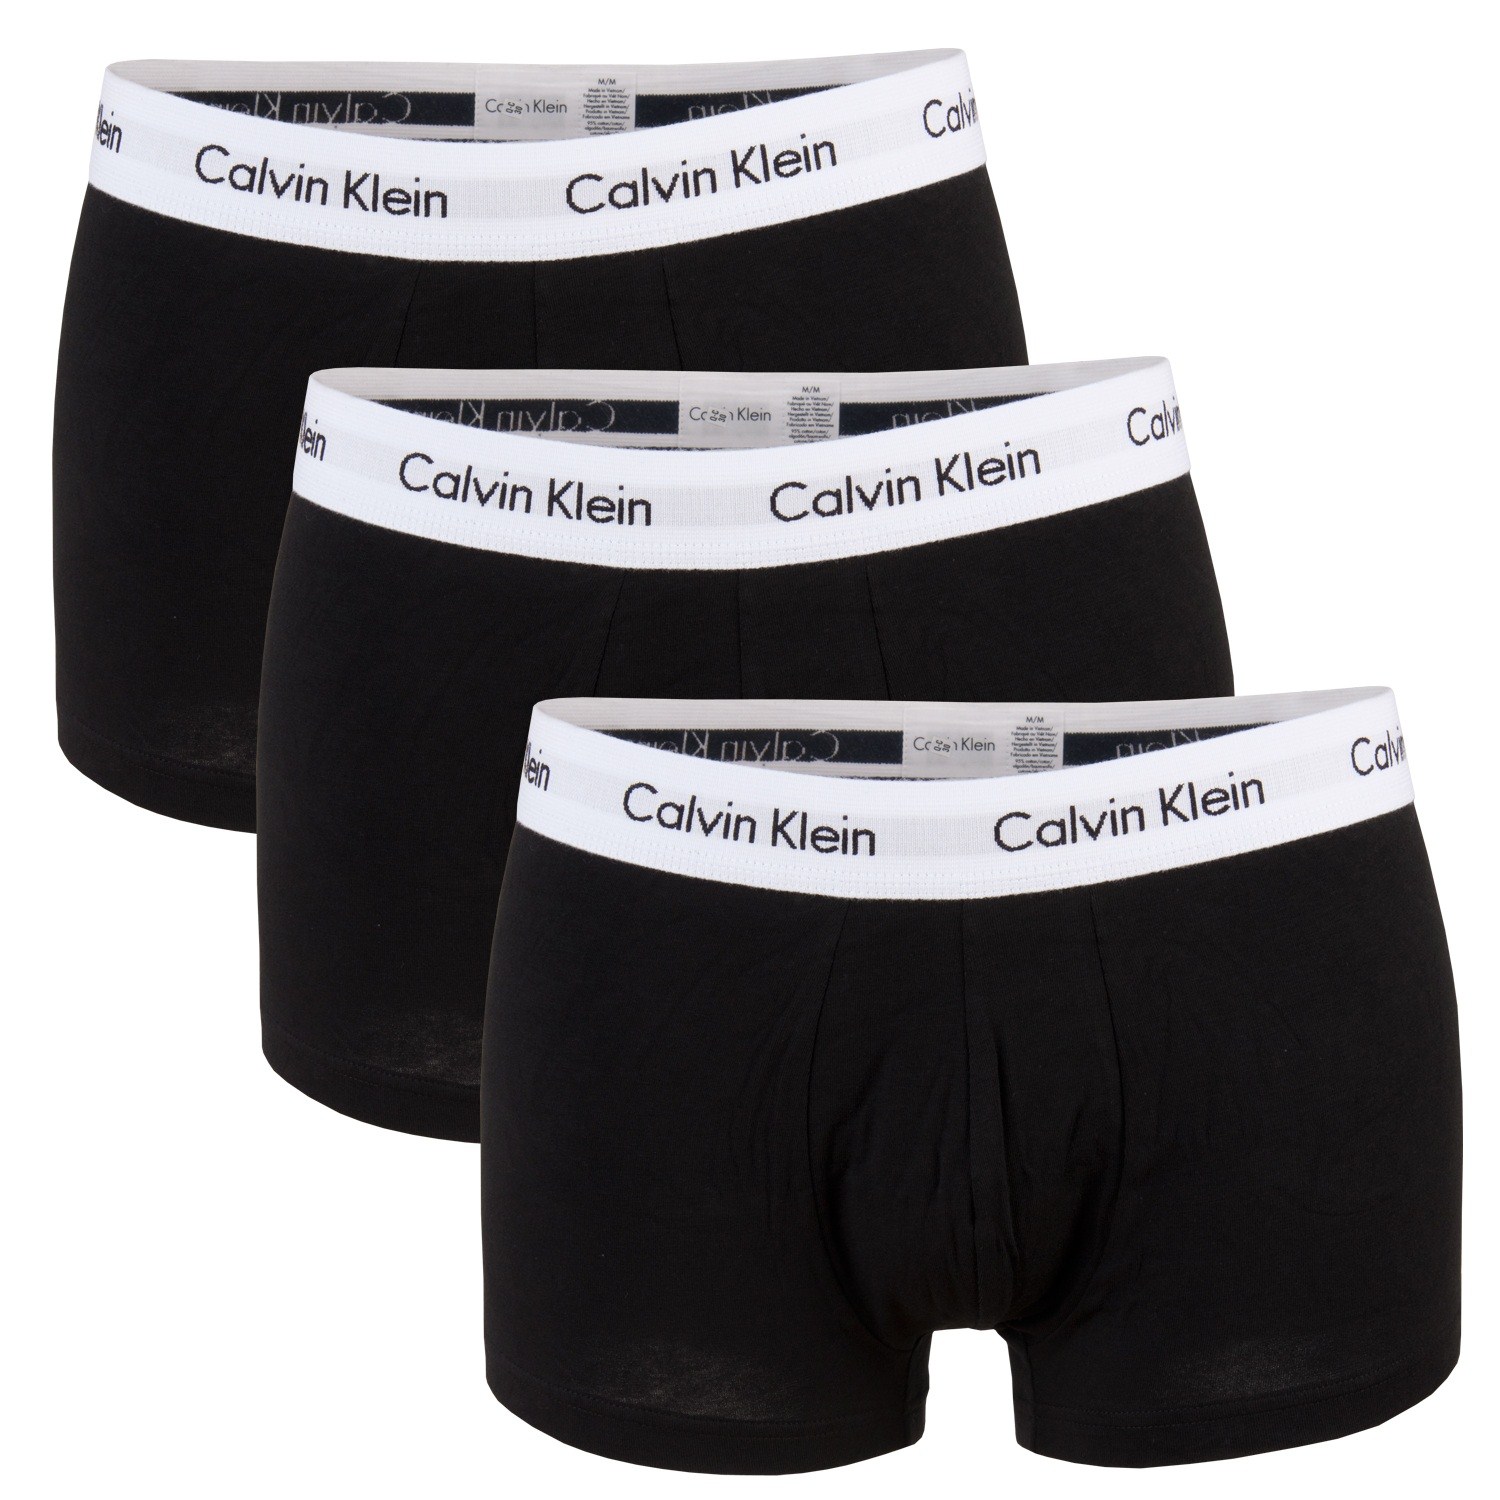 Calvin Klein CS Lowrise Trunks Black